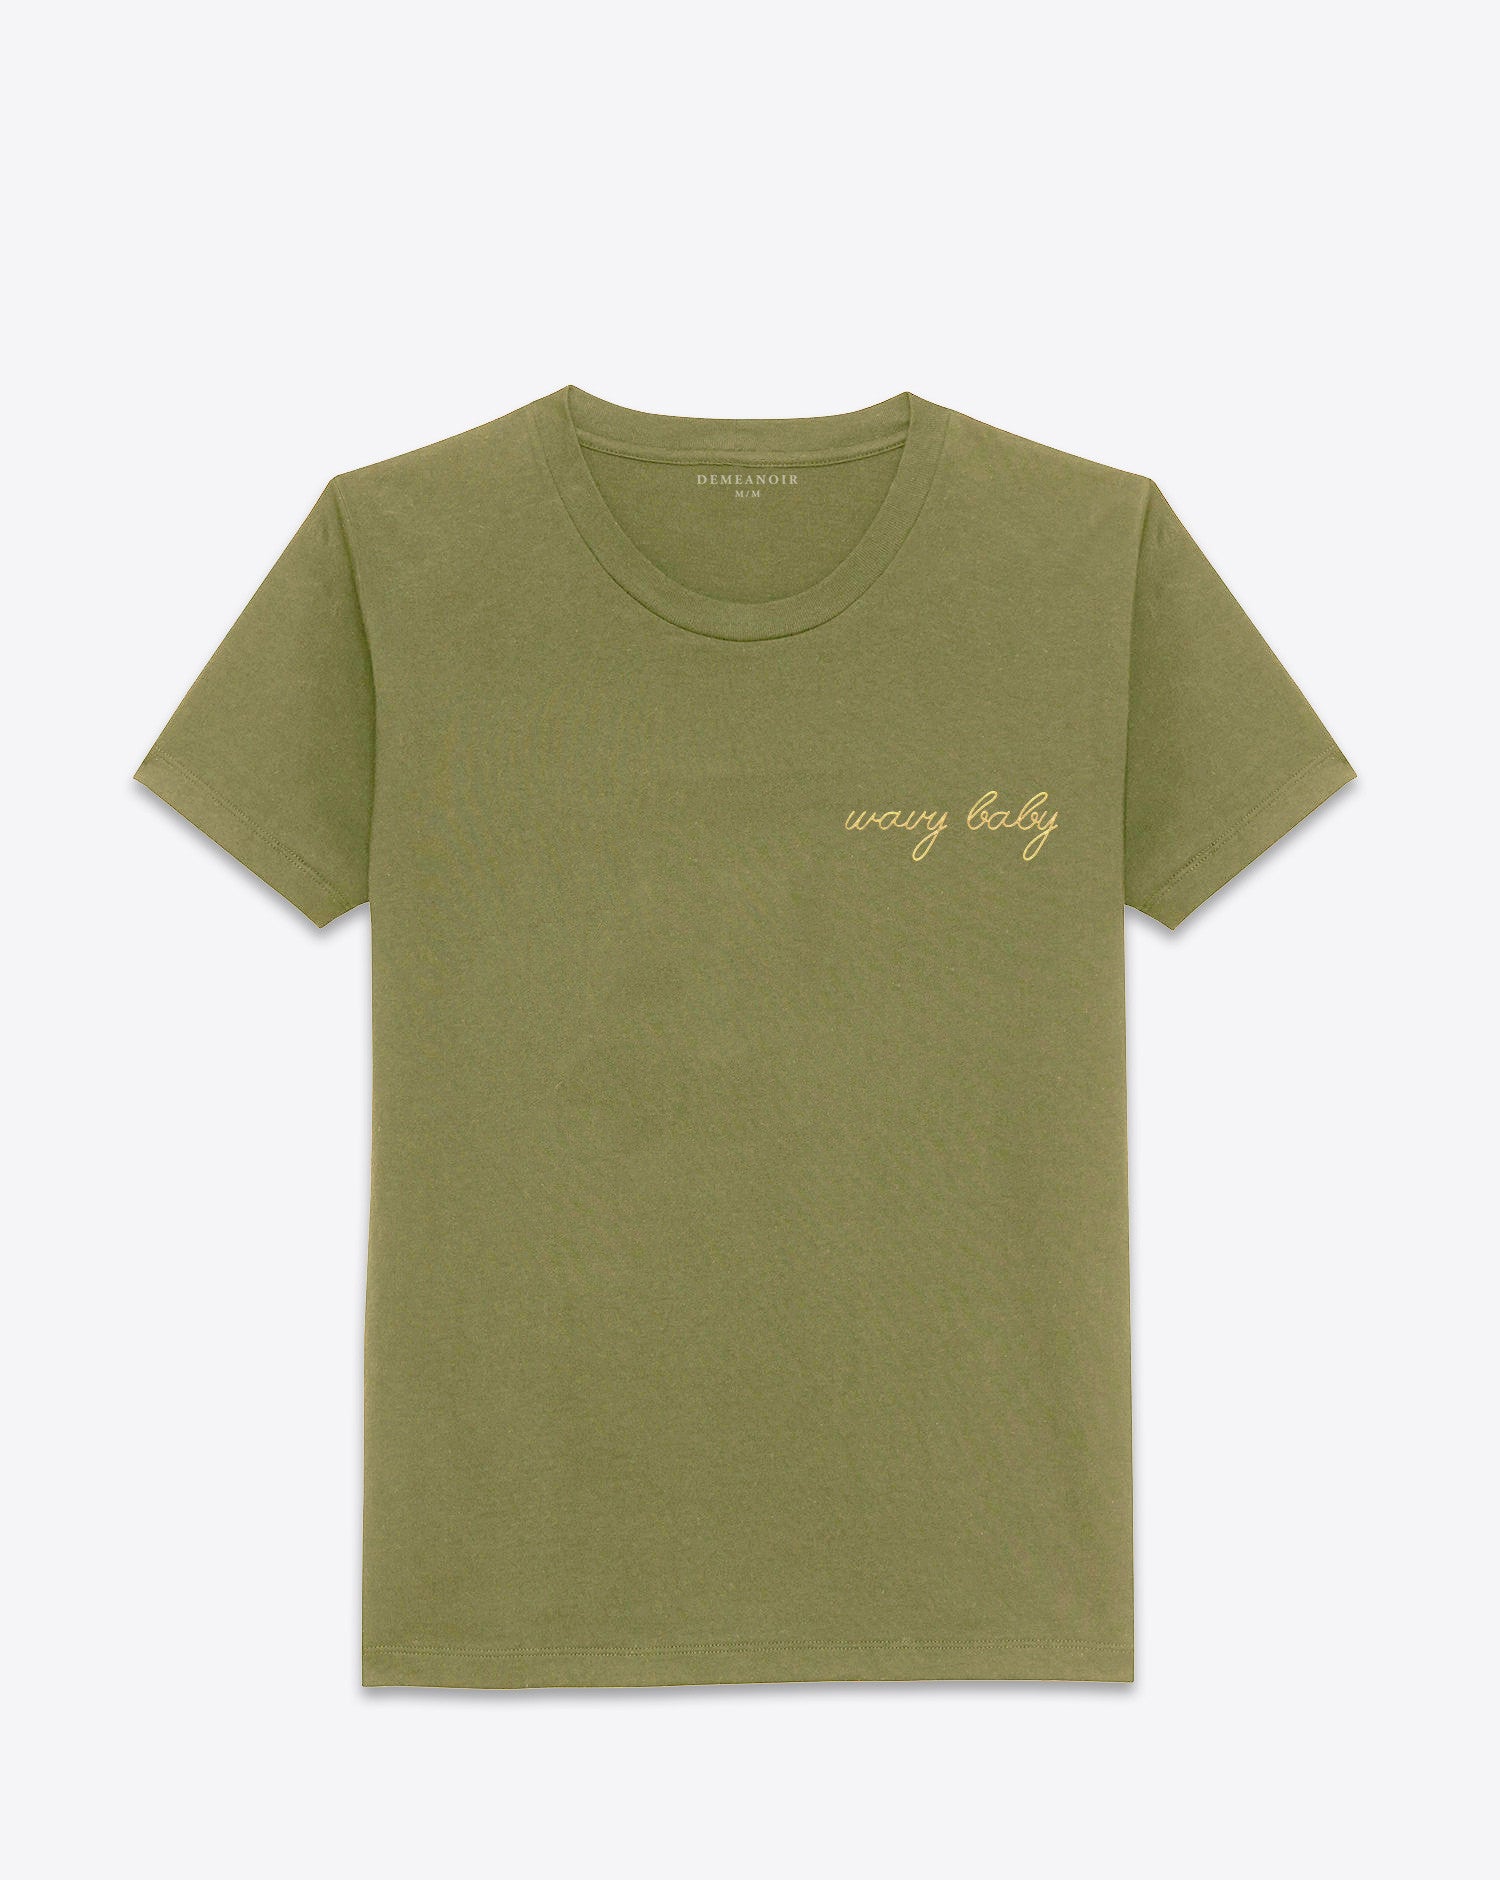 Wavy Baby T-Shirt Olive Green - DEMEANOIR